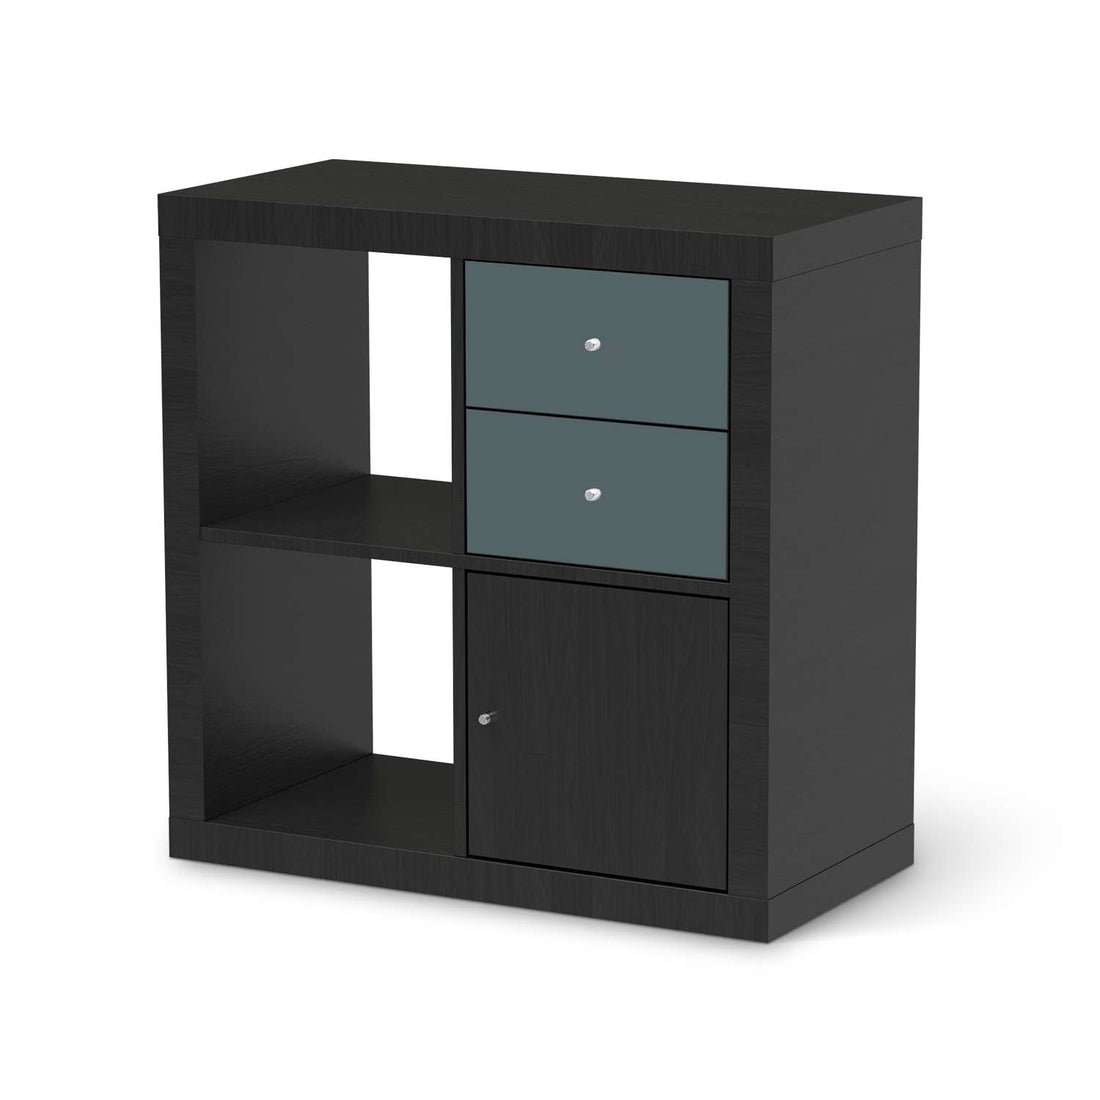 Möbelfolie Blaugrau Light - IKEA Kallax Regal Schubladen - schwarz